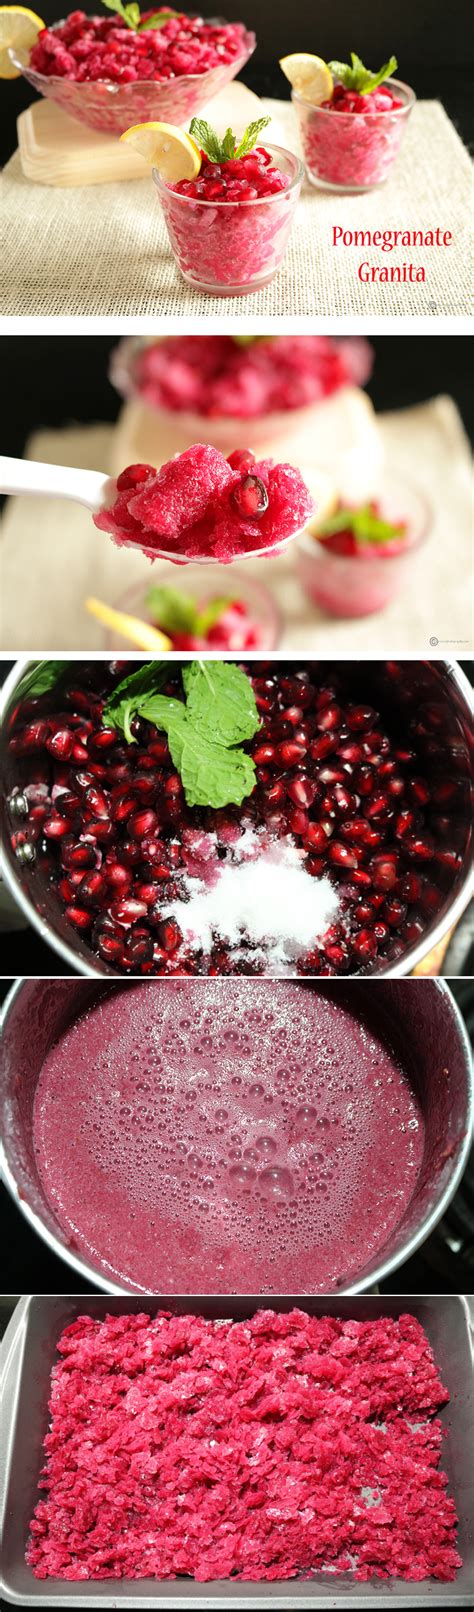 Christmas baking & dessert recipes. Pomegranate Granita | Recipe | Pomegranate recipes, Dessert recipes, Food recipes